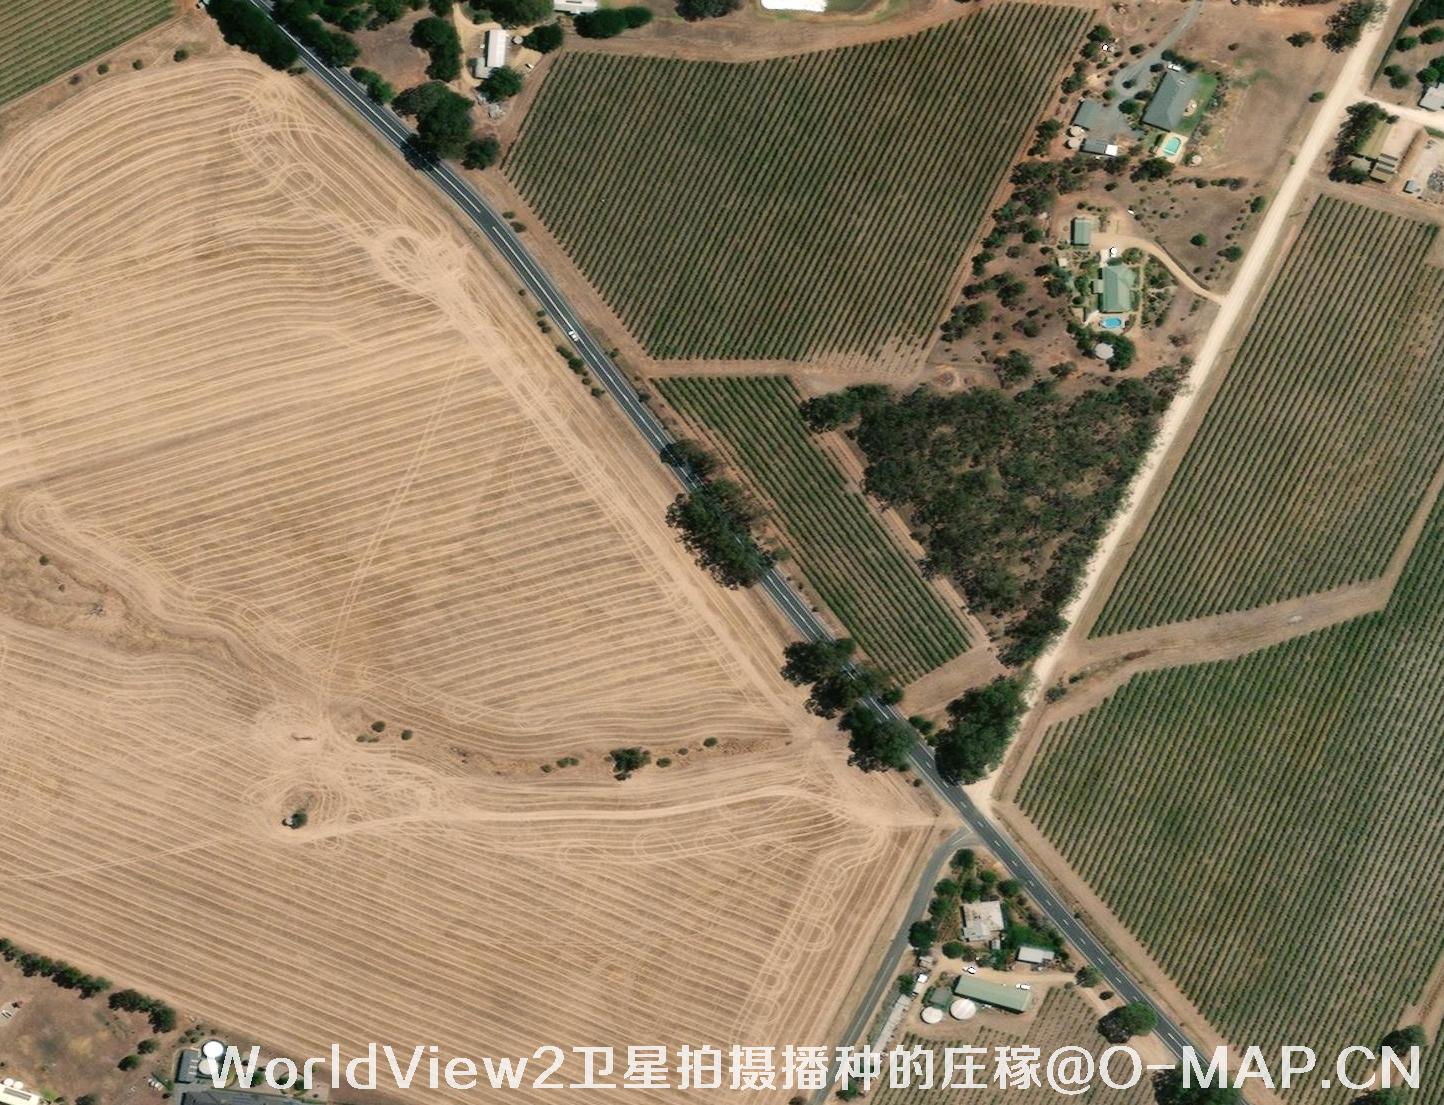 WorldView2卫星拍摄的已经播种的庄稼